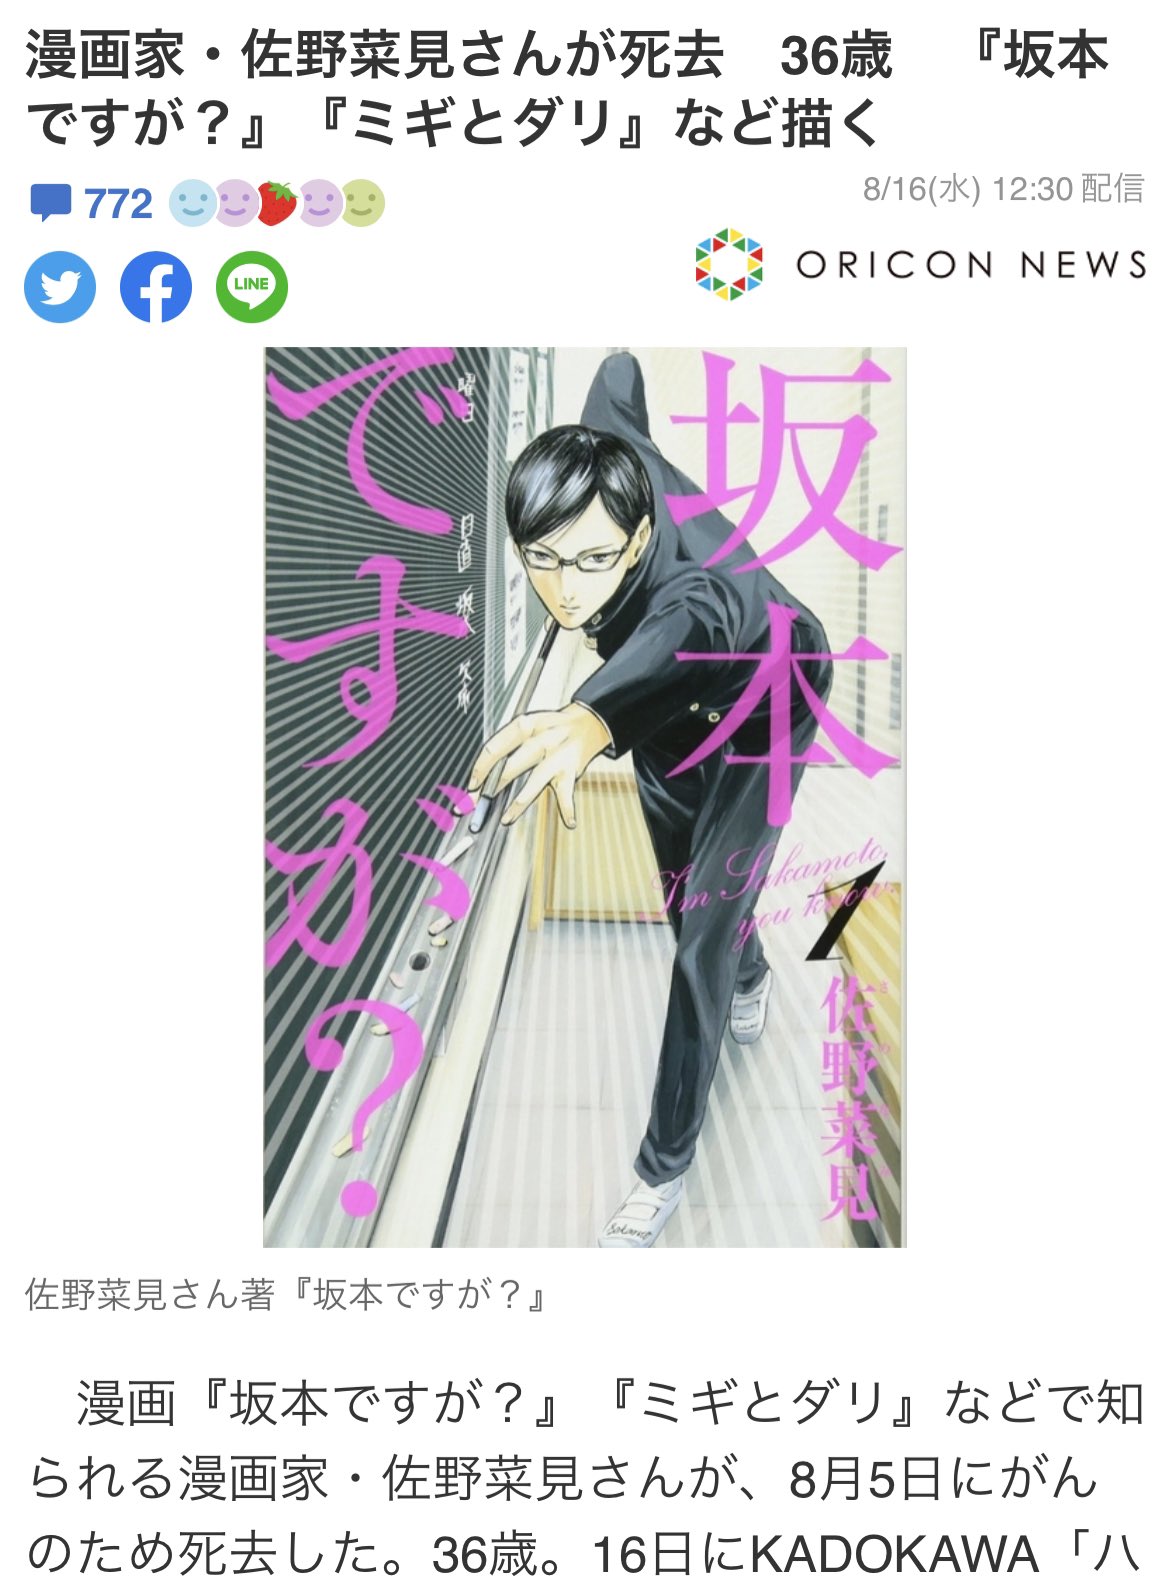 Absolute Otakuu on Instagram: Renowned Japanese mangaka Nami Sano, known  for creating Haven't You Heard? I'm Sakamoto (Sakamoto Desu Ga?) manga,  has sadly succumbed to cancer. Nami Sano passed away on August